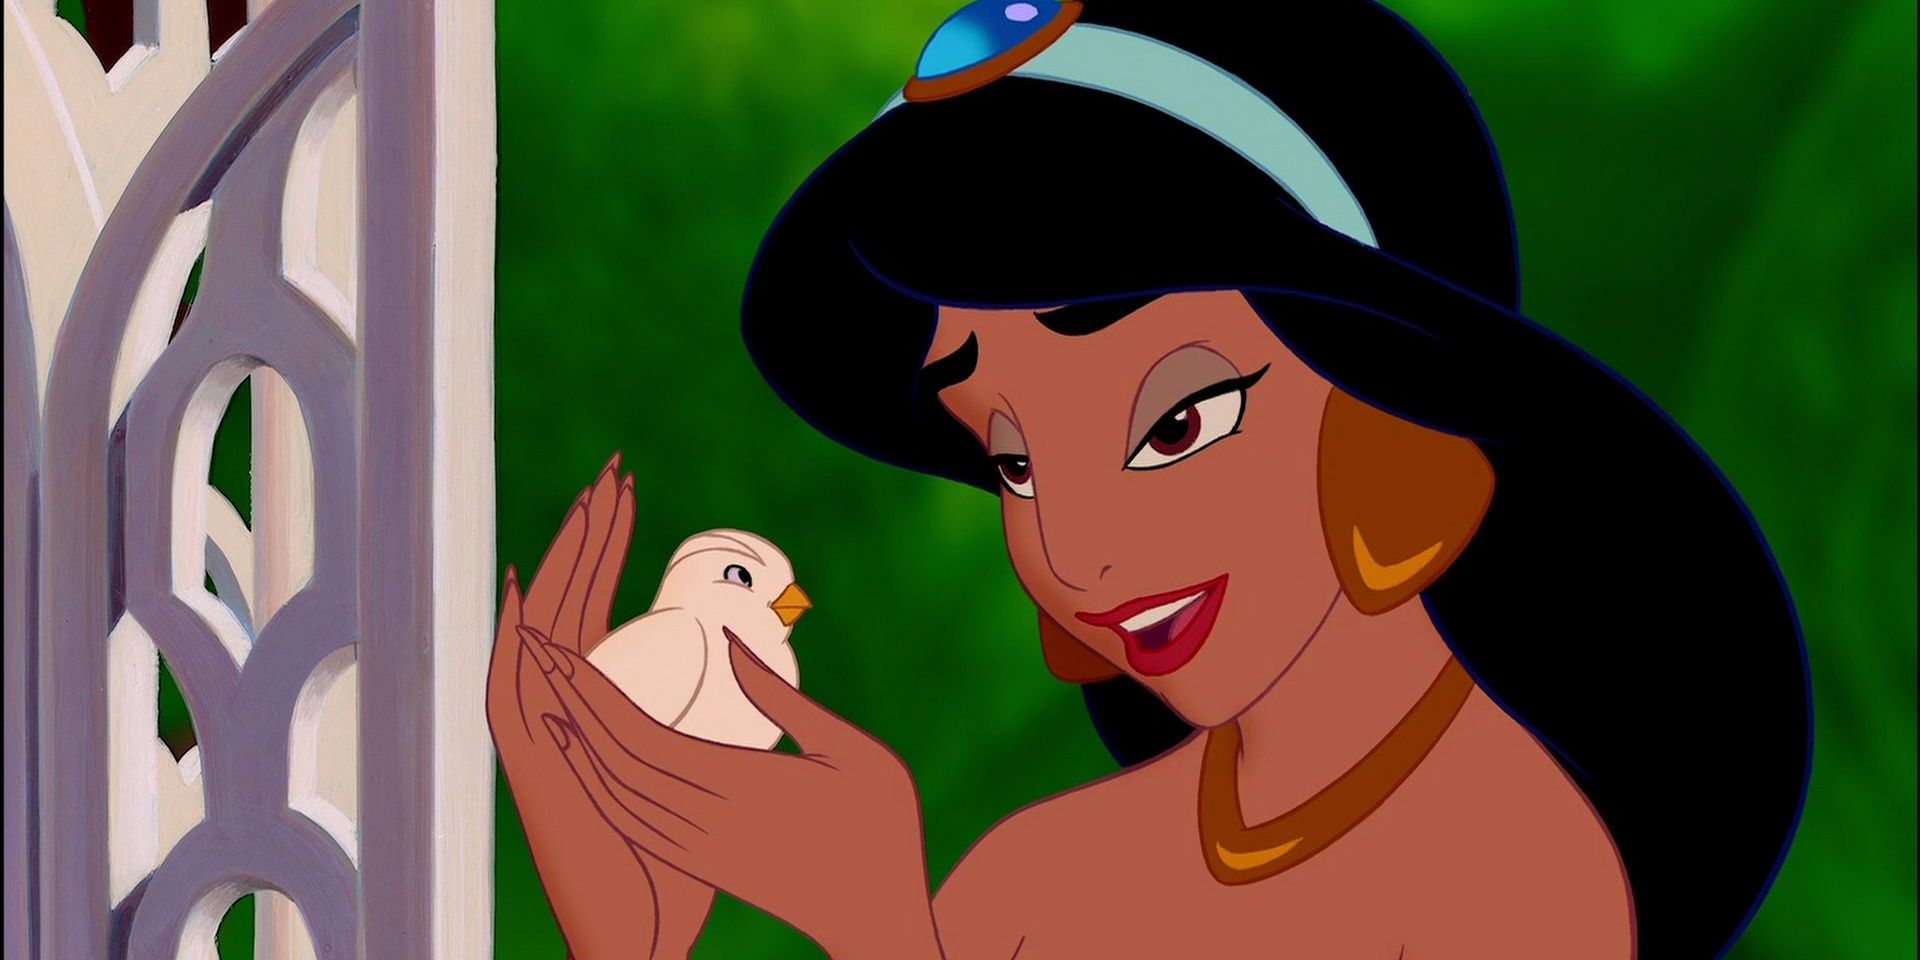 Disney Aladdin Jasmine Petting A Small White Bird In The Palace Garden